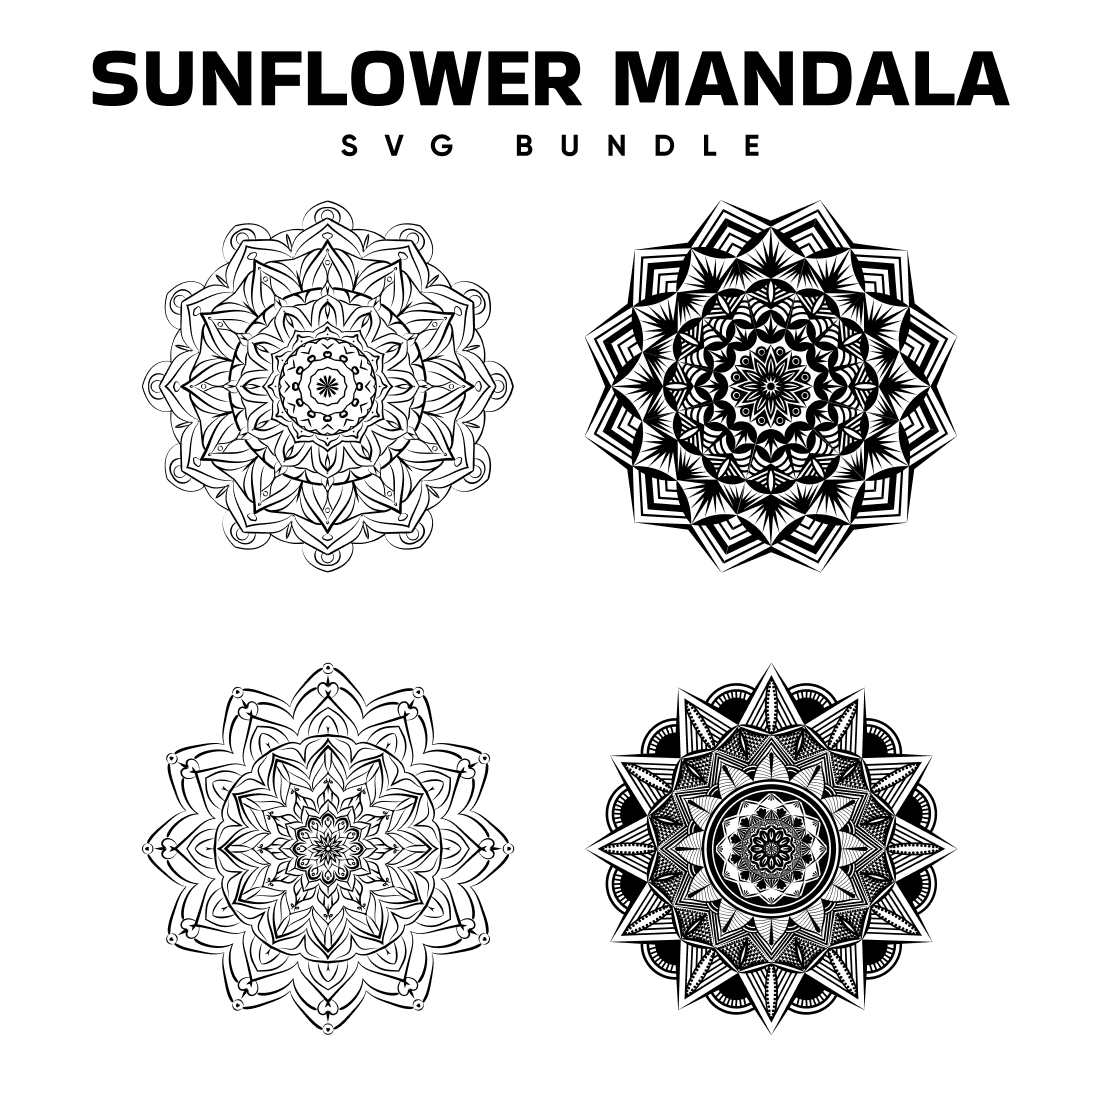 Sunflower Mandala SVG.